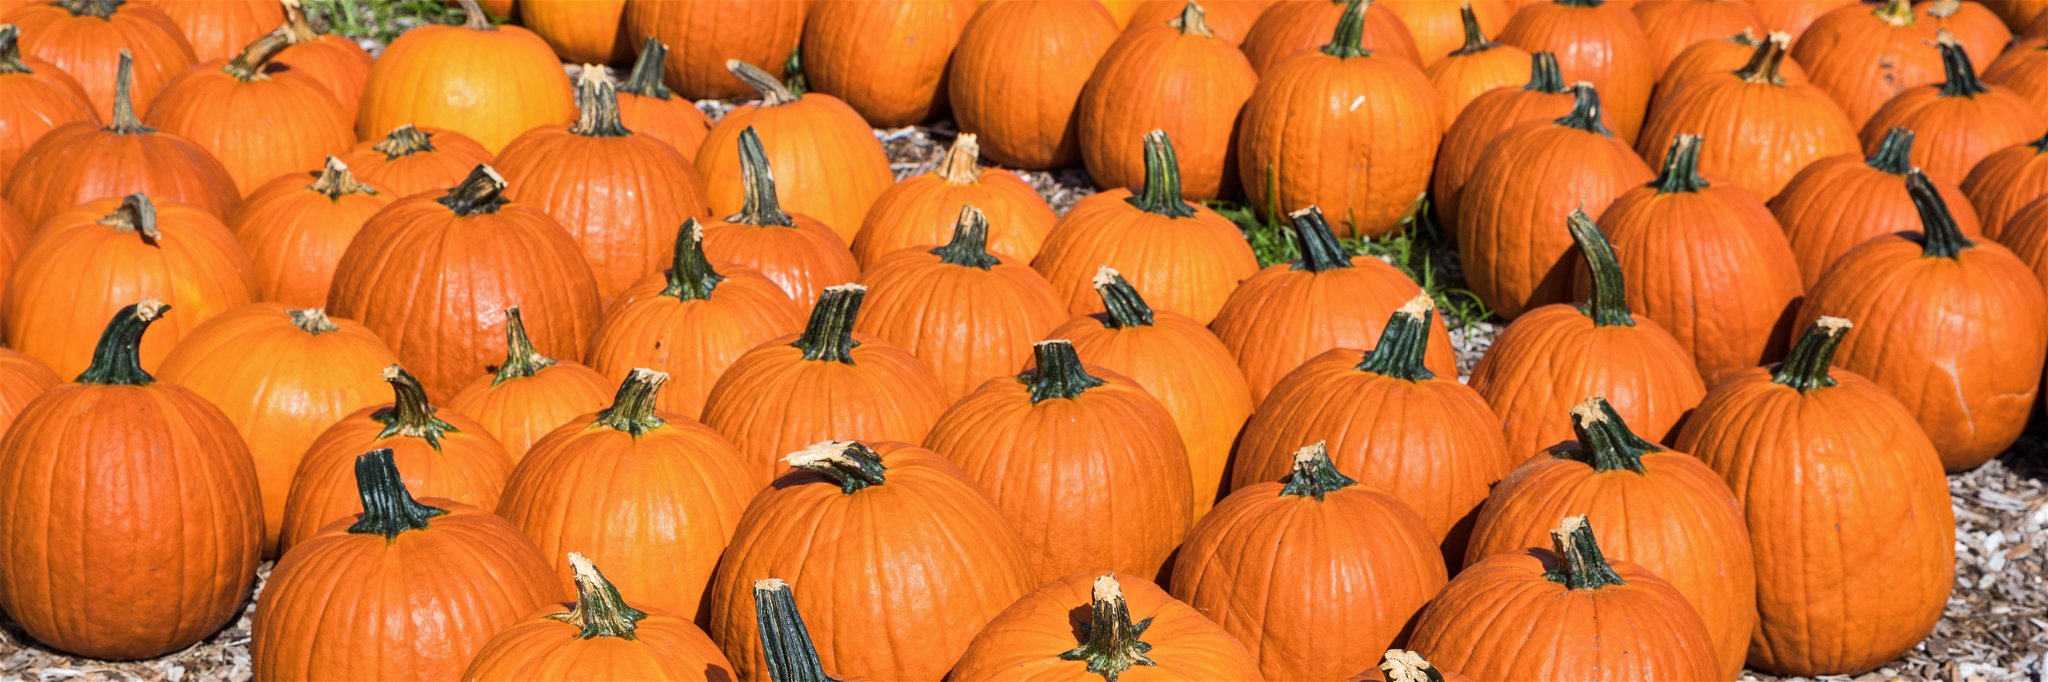 Pumpkin Shortage Could Haunt American Customers This Halloween